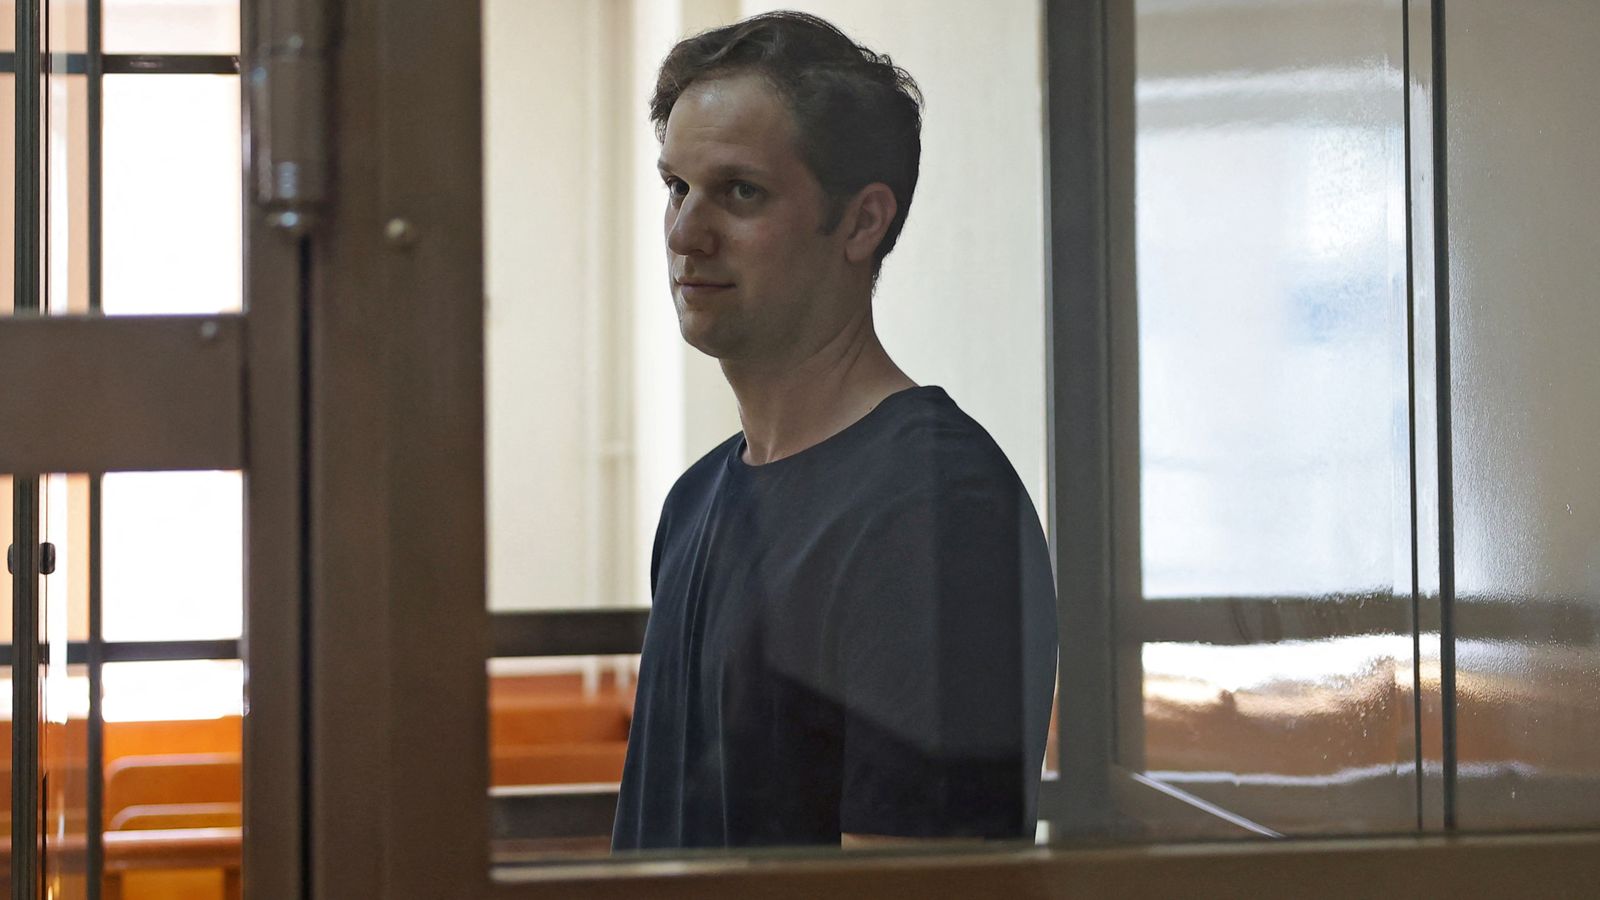 Evan Gershkovich: Wall Street Journal reporter accused of spying in Russia loses appeal against pre-trial detention